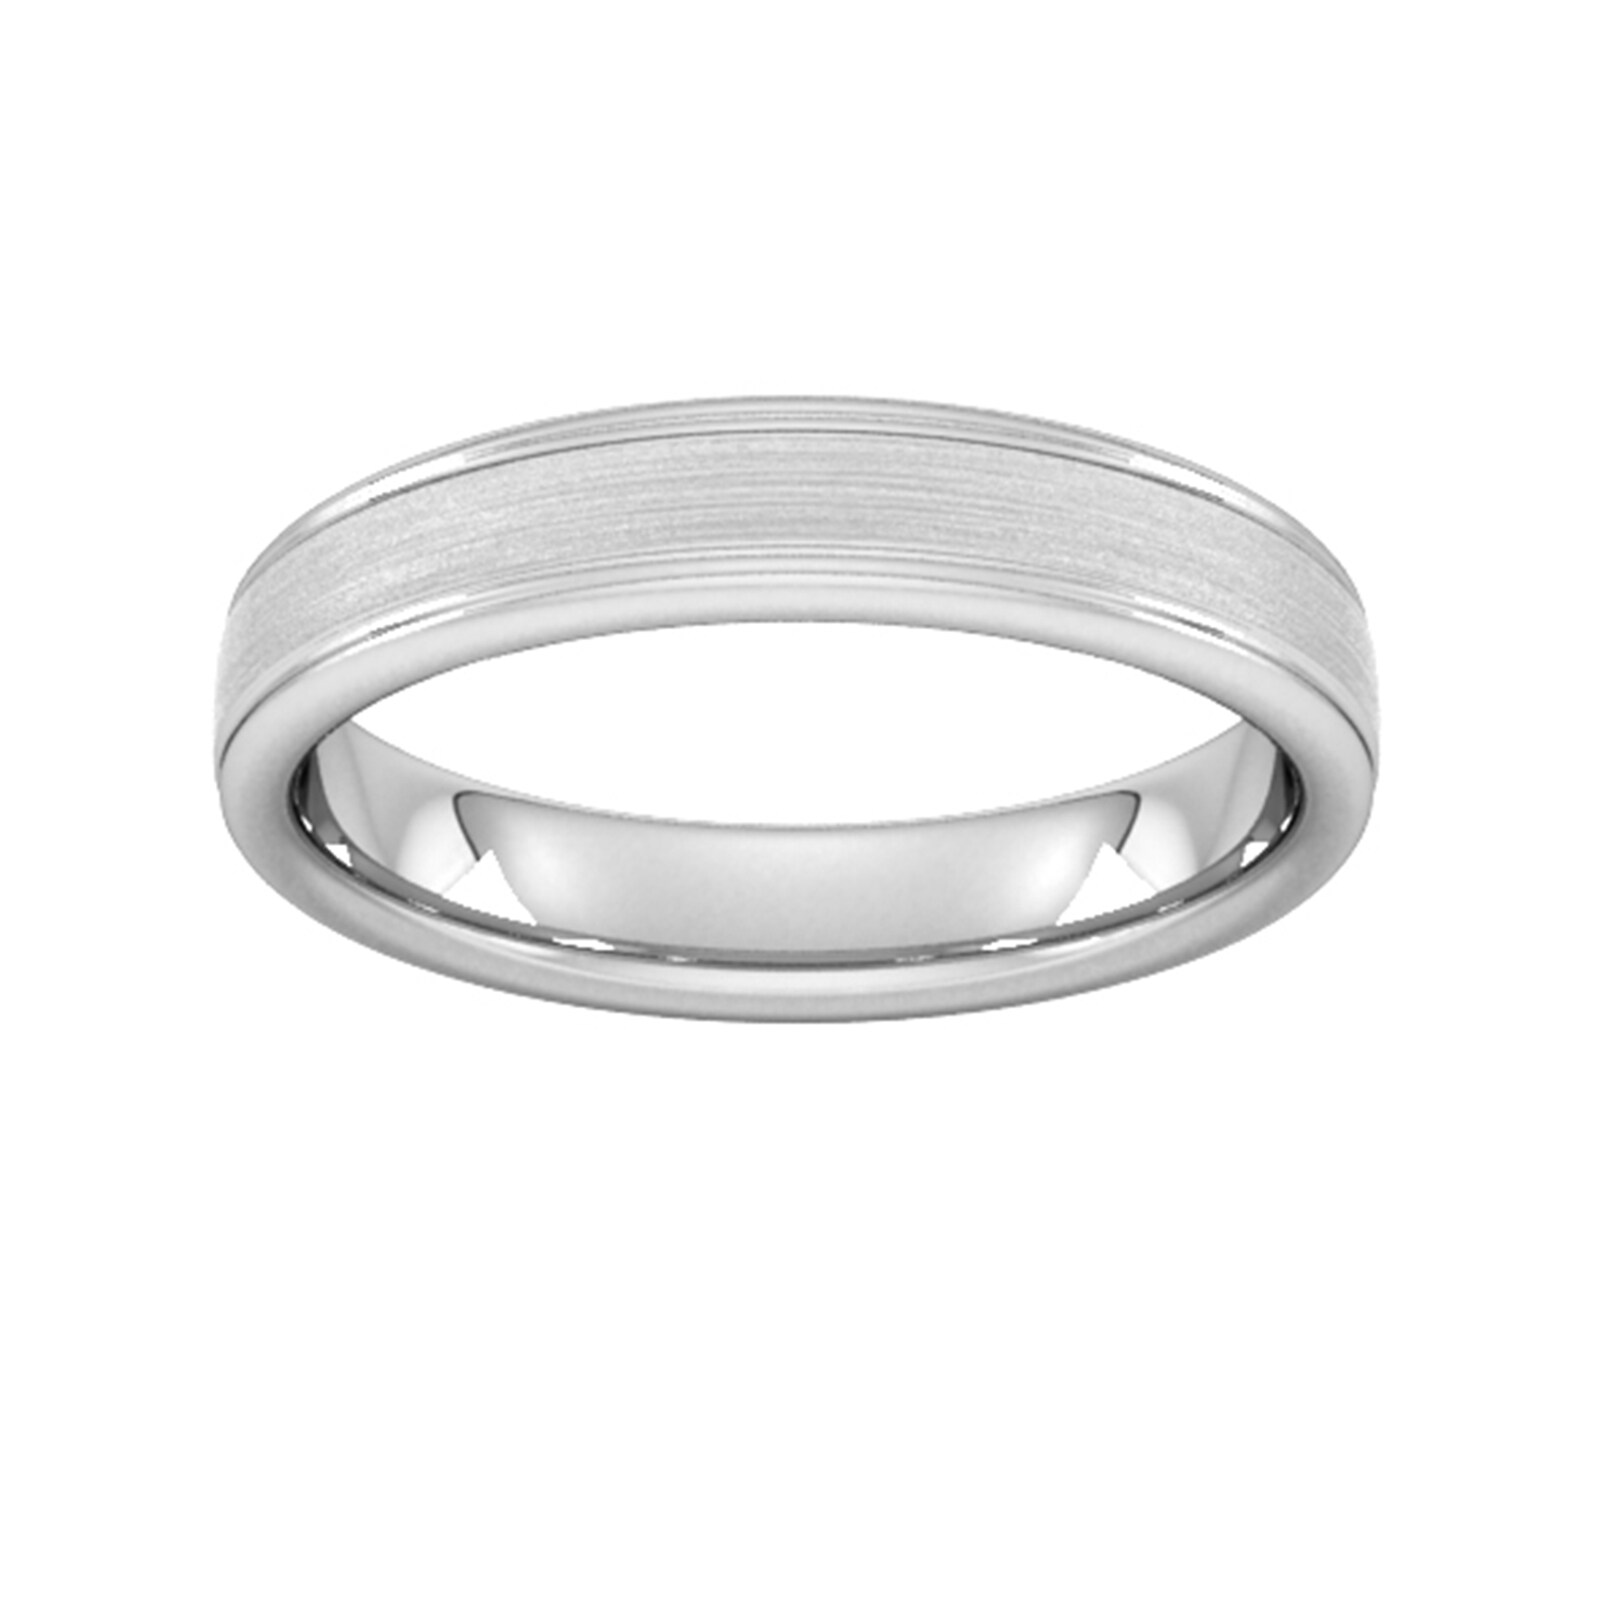 4mm Slight Court Heavy Matt Centre With Grooves Wedding Ring In 950 Palladium - Ring Size Q